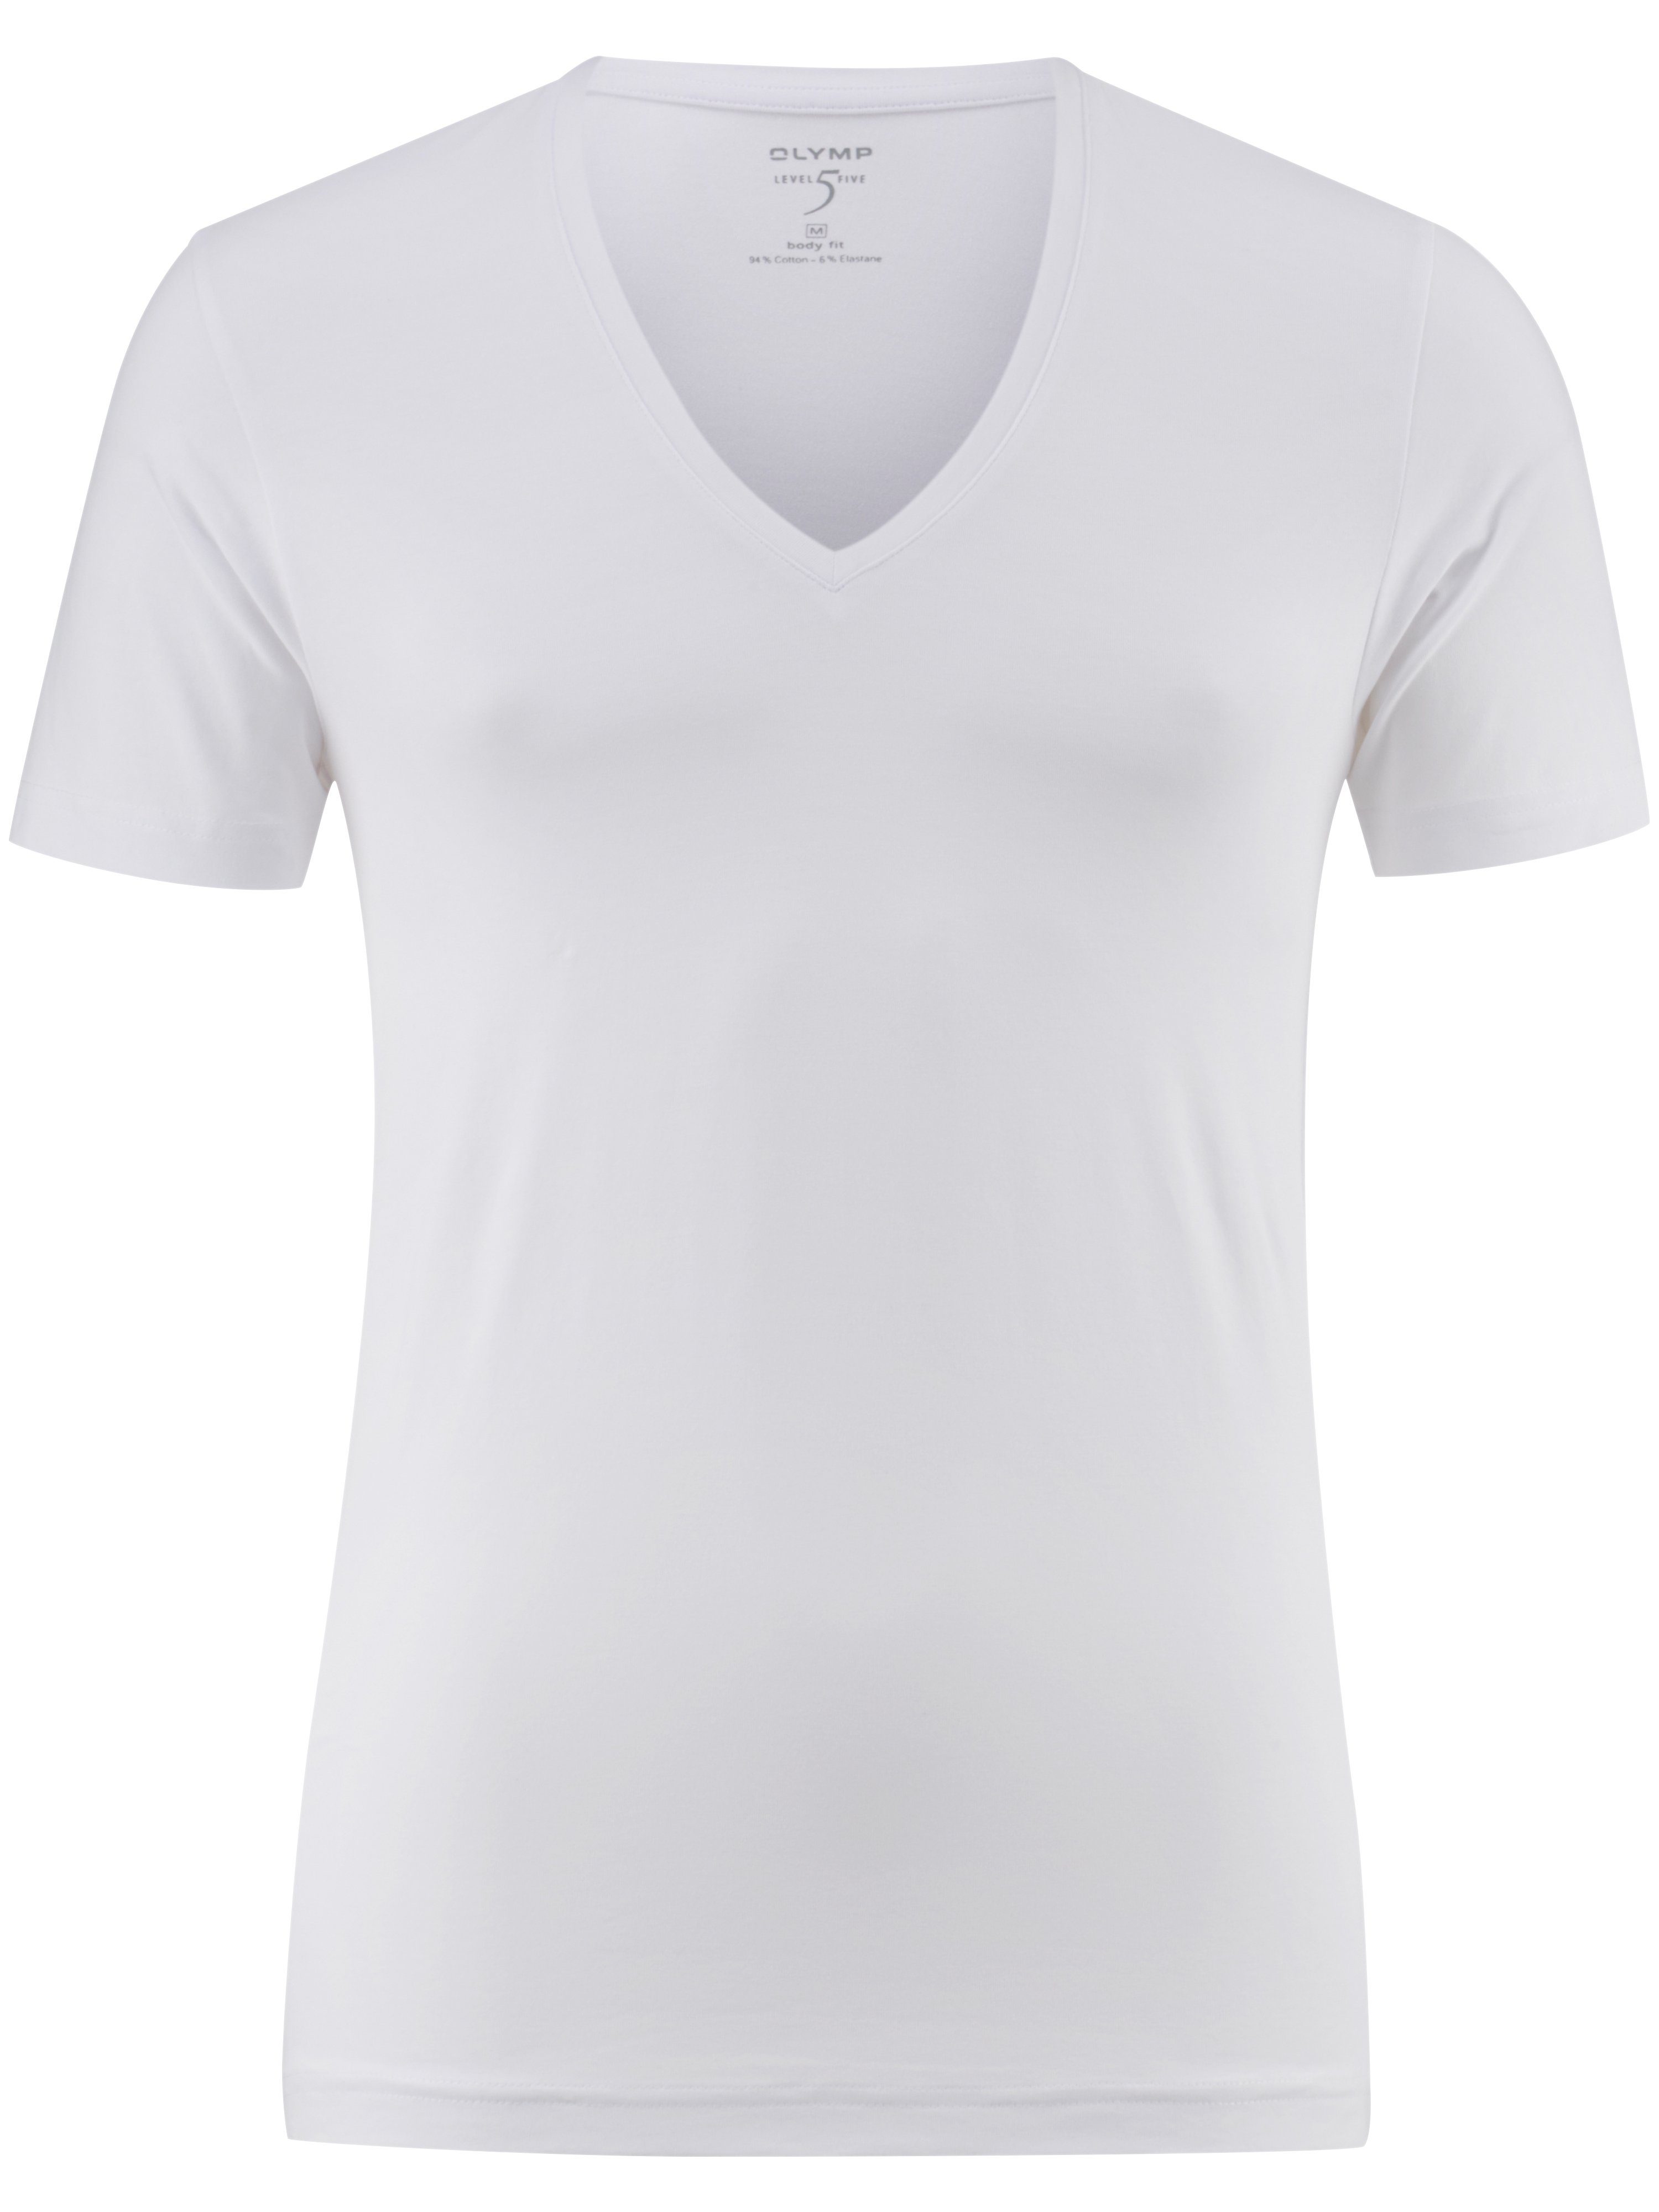 OLYMP fit T-Shirt weiß 5 body Level